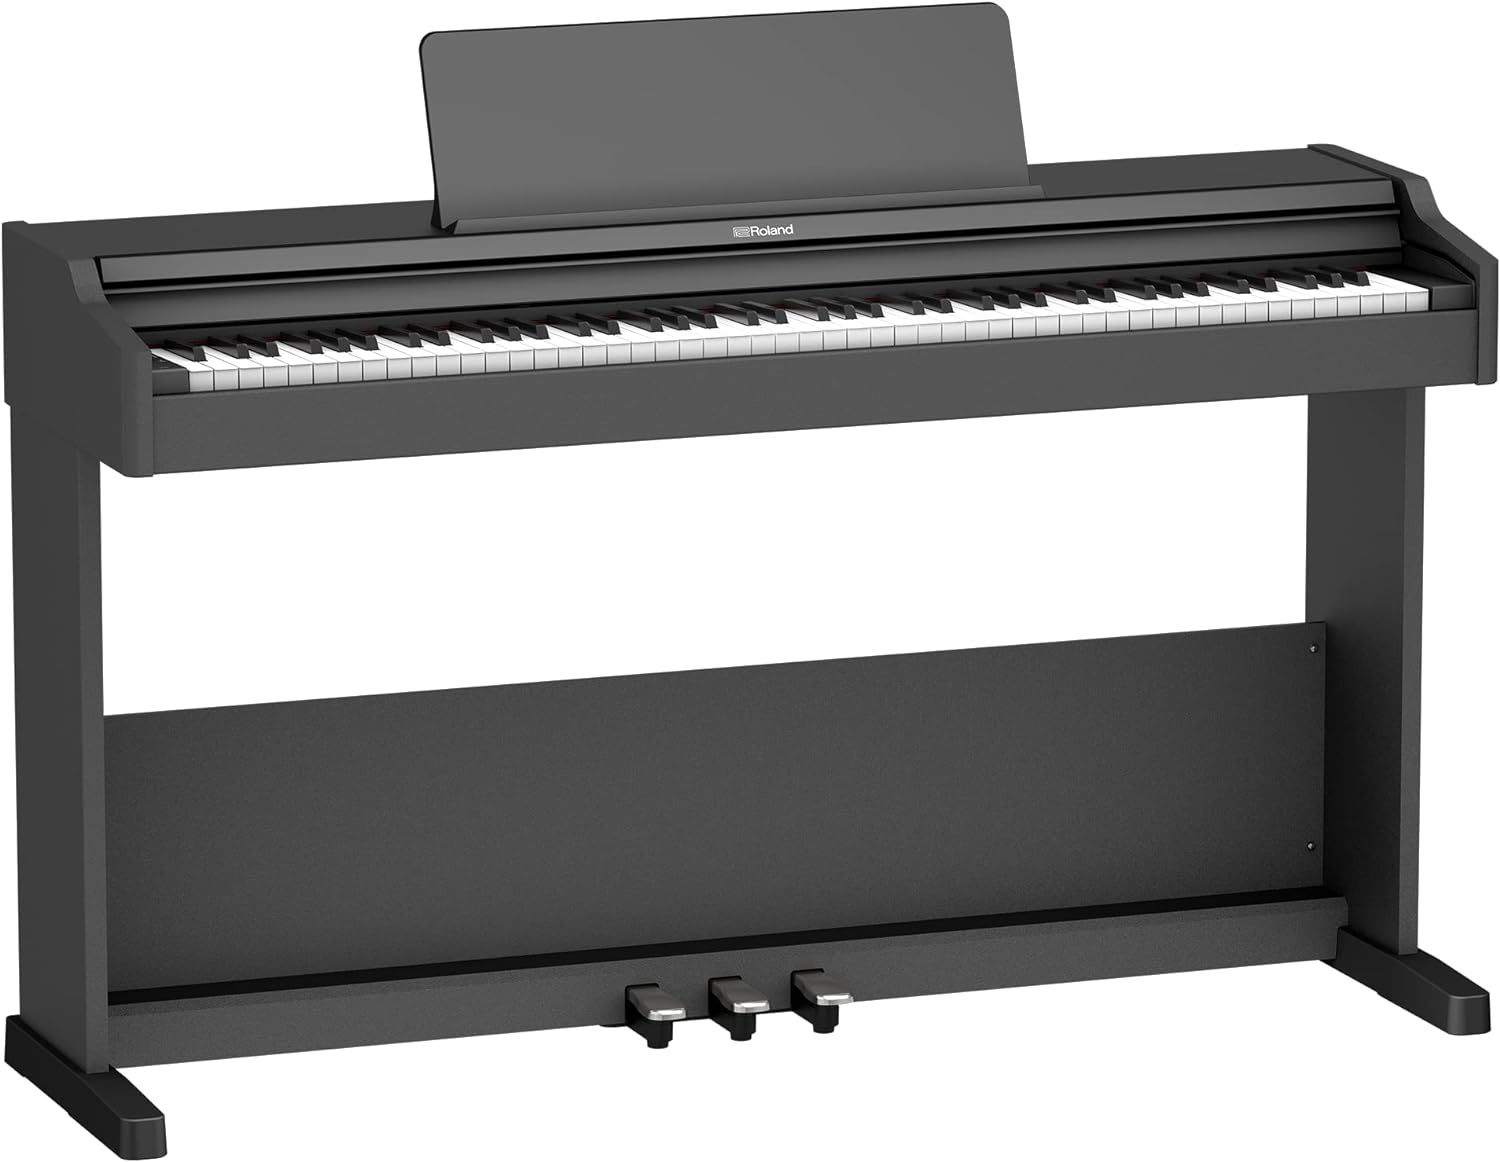 Ejemplo de la estética de primer nivel de los pianos Roland.